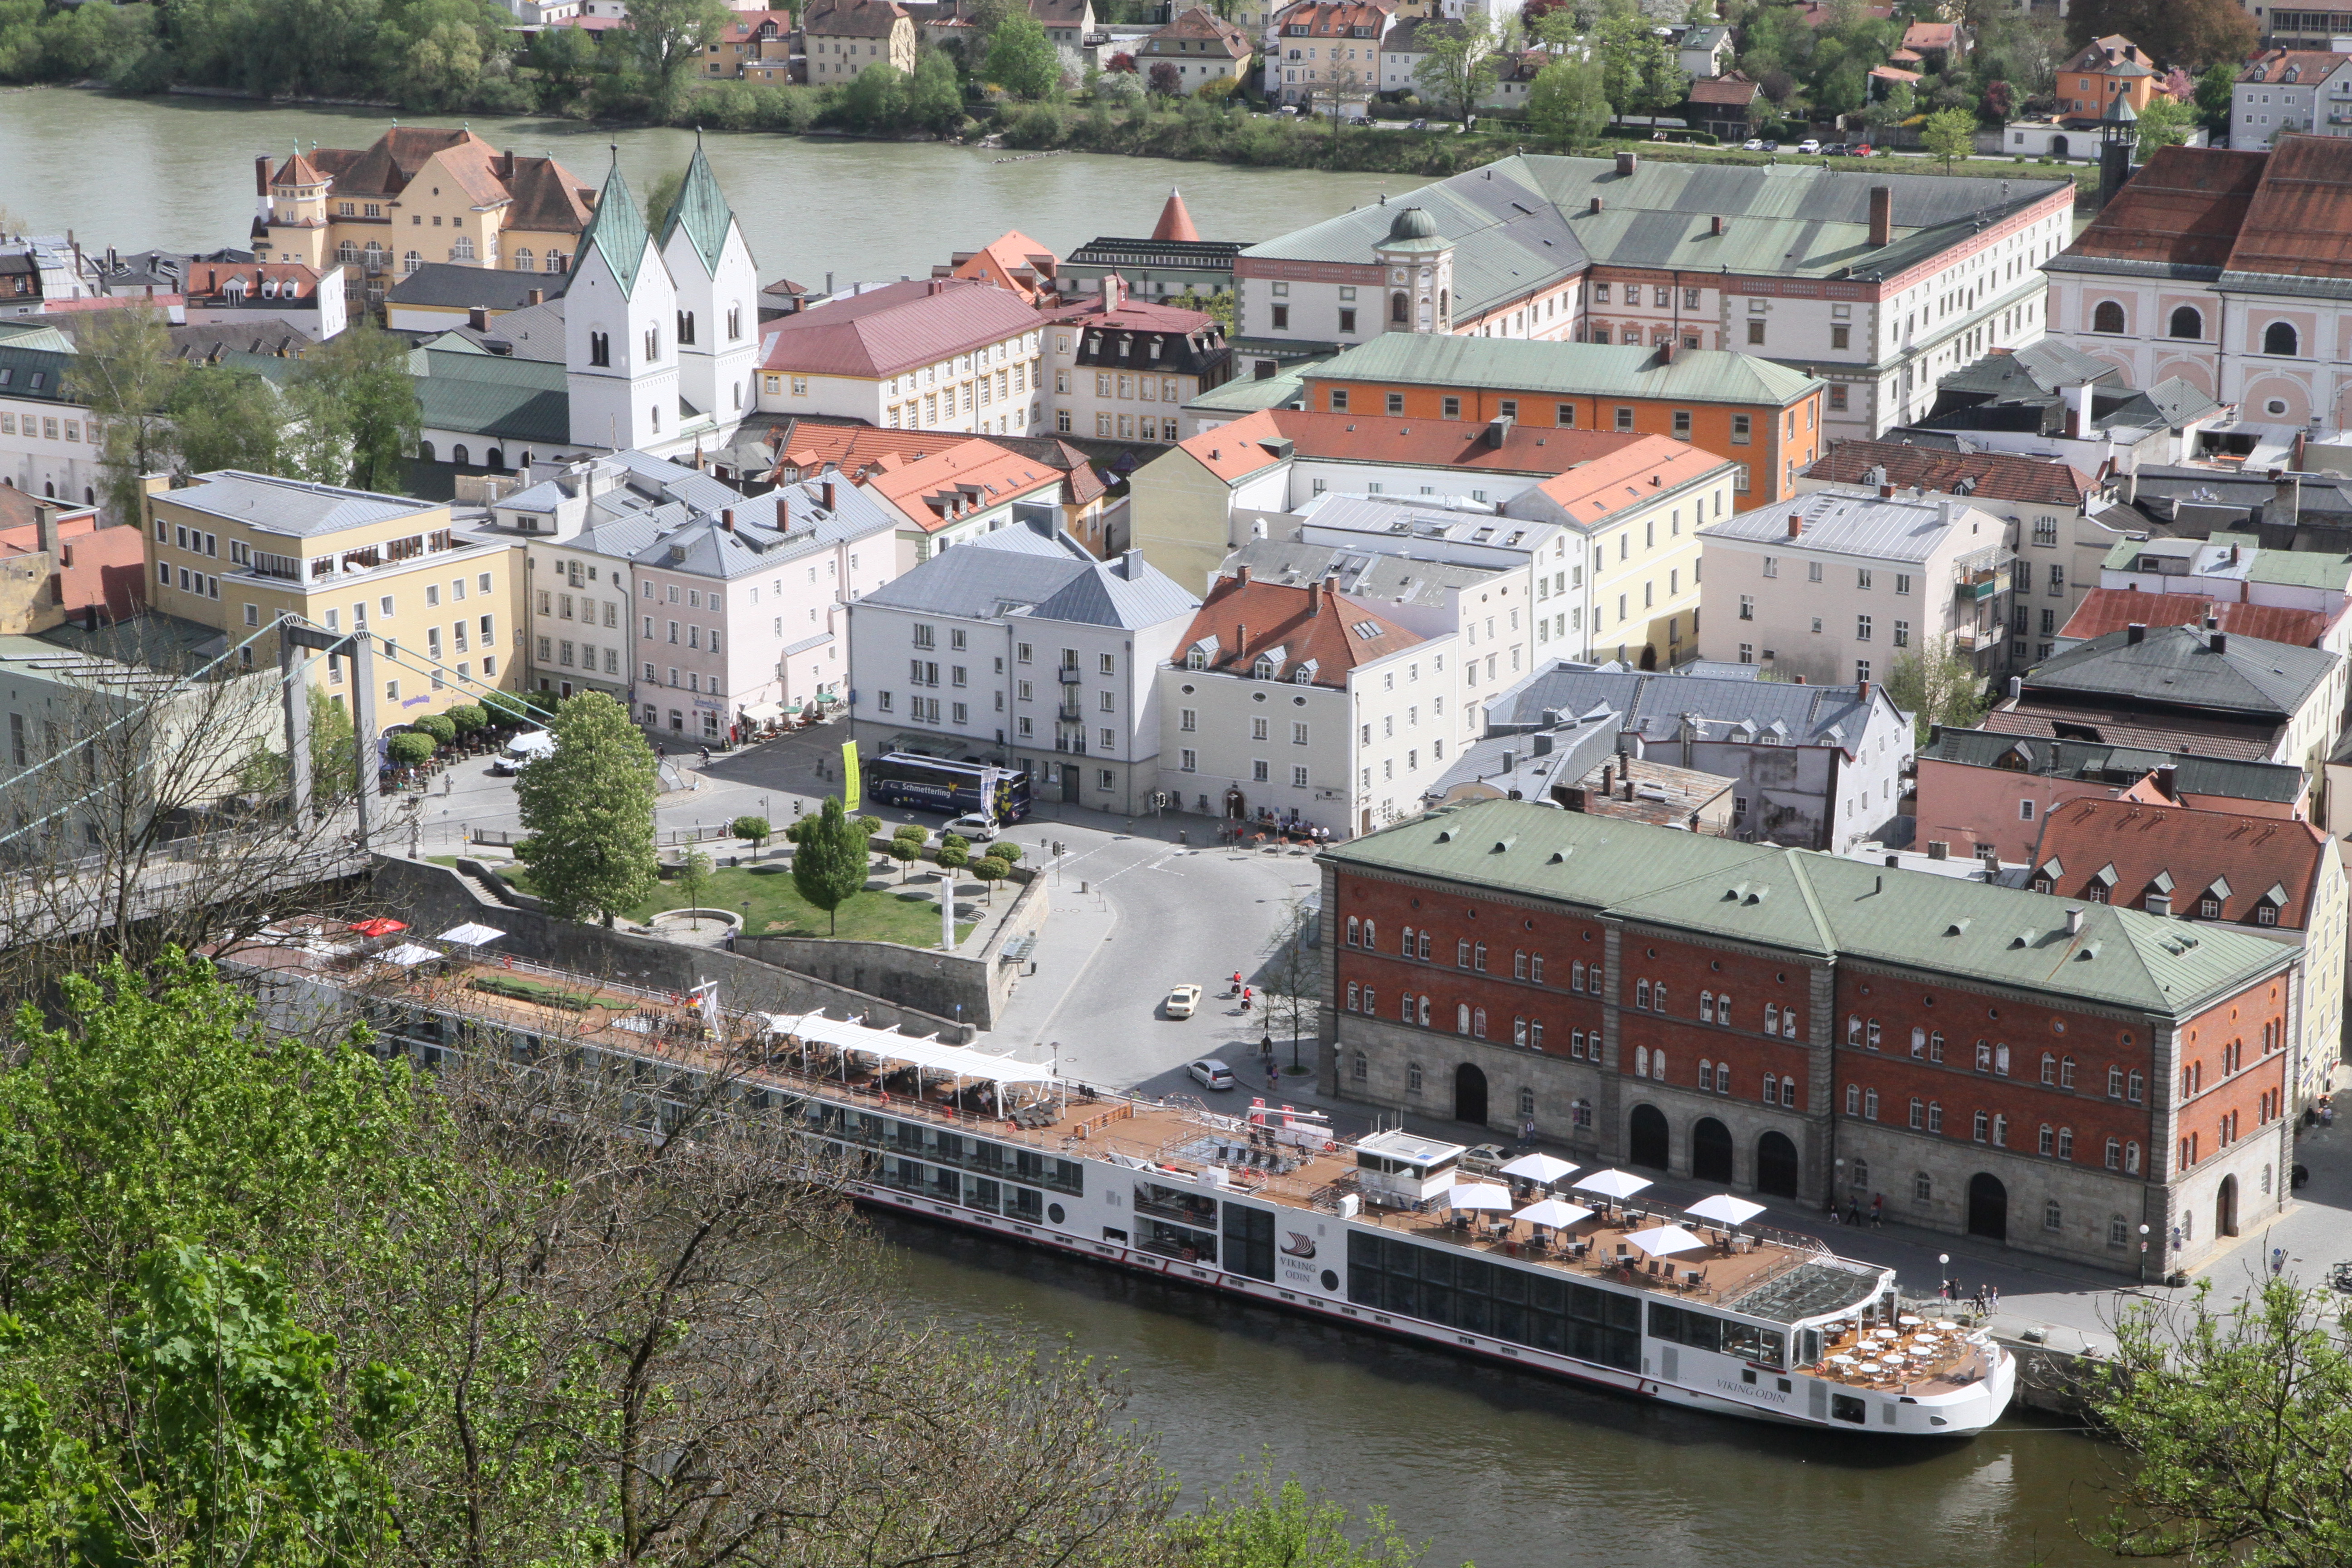 Viking Odin docked in Passau